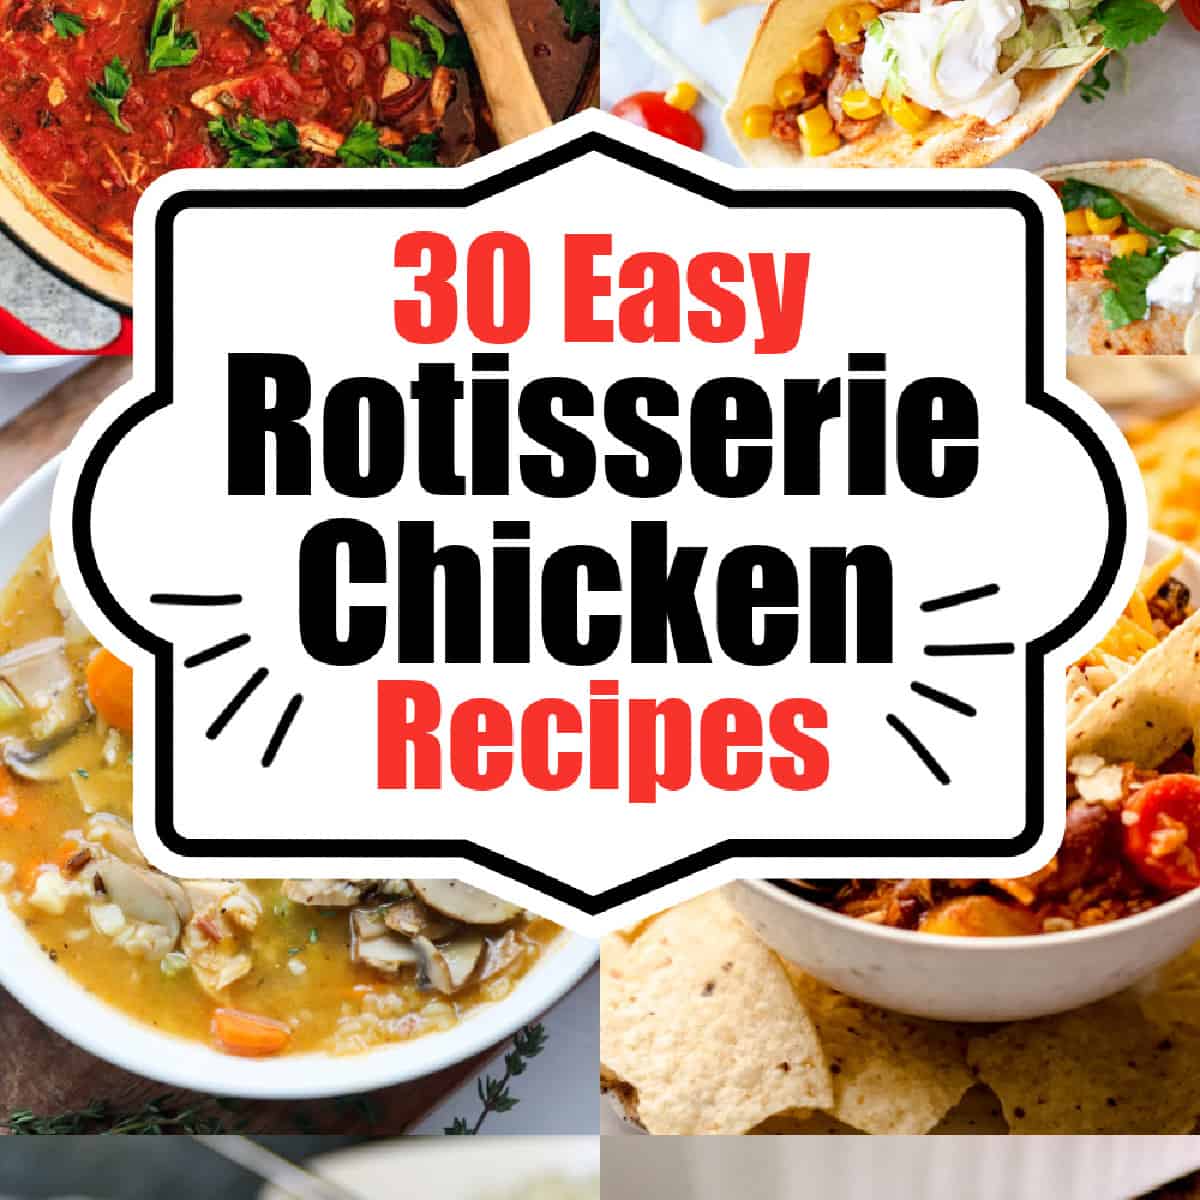 30 Easy Rotisserie Chicken Recipes square banner.